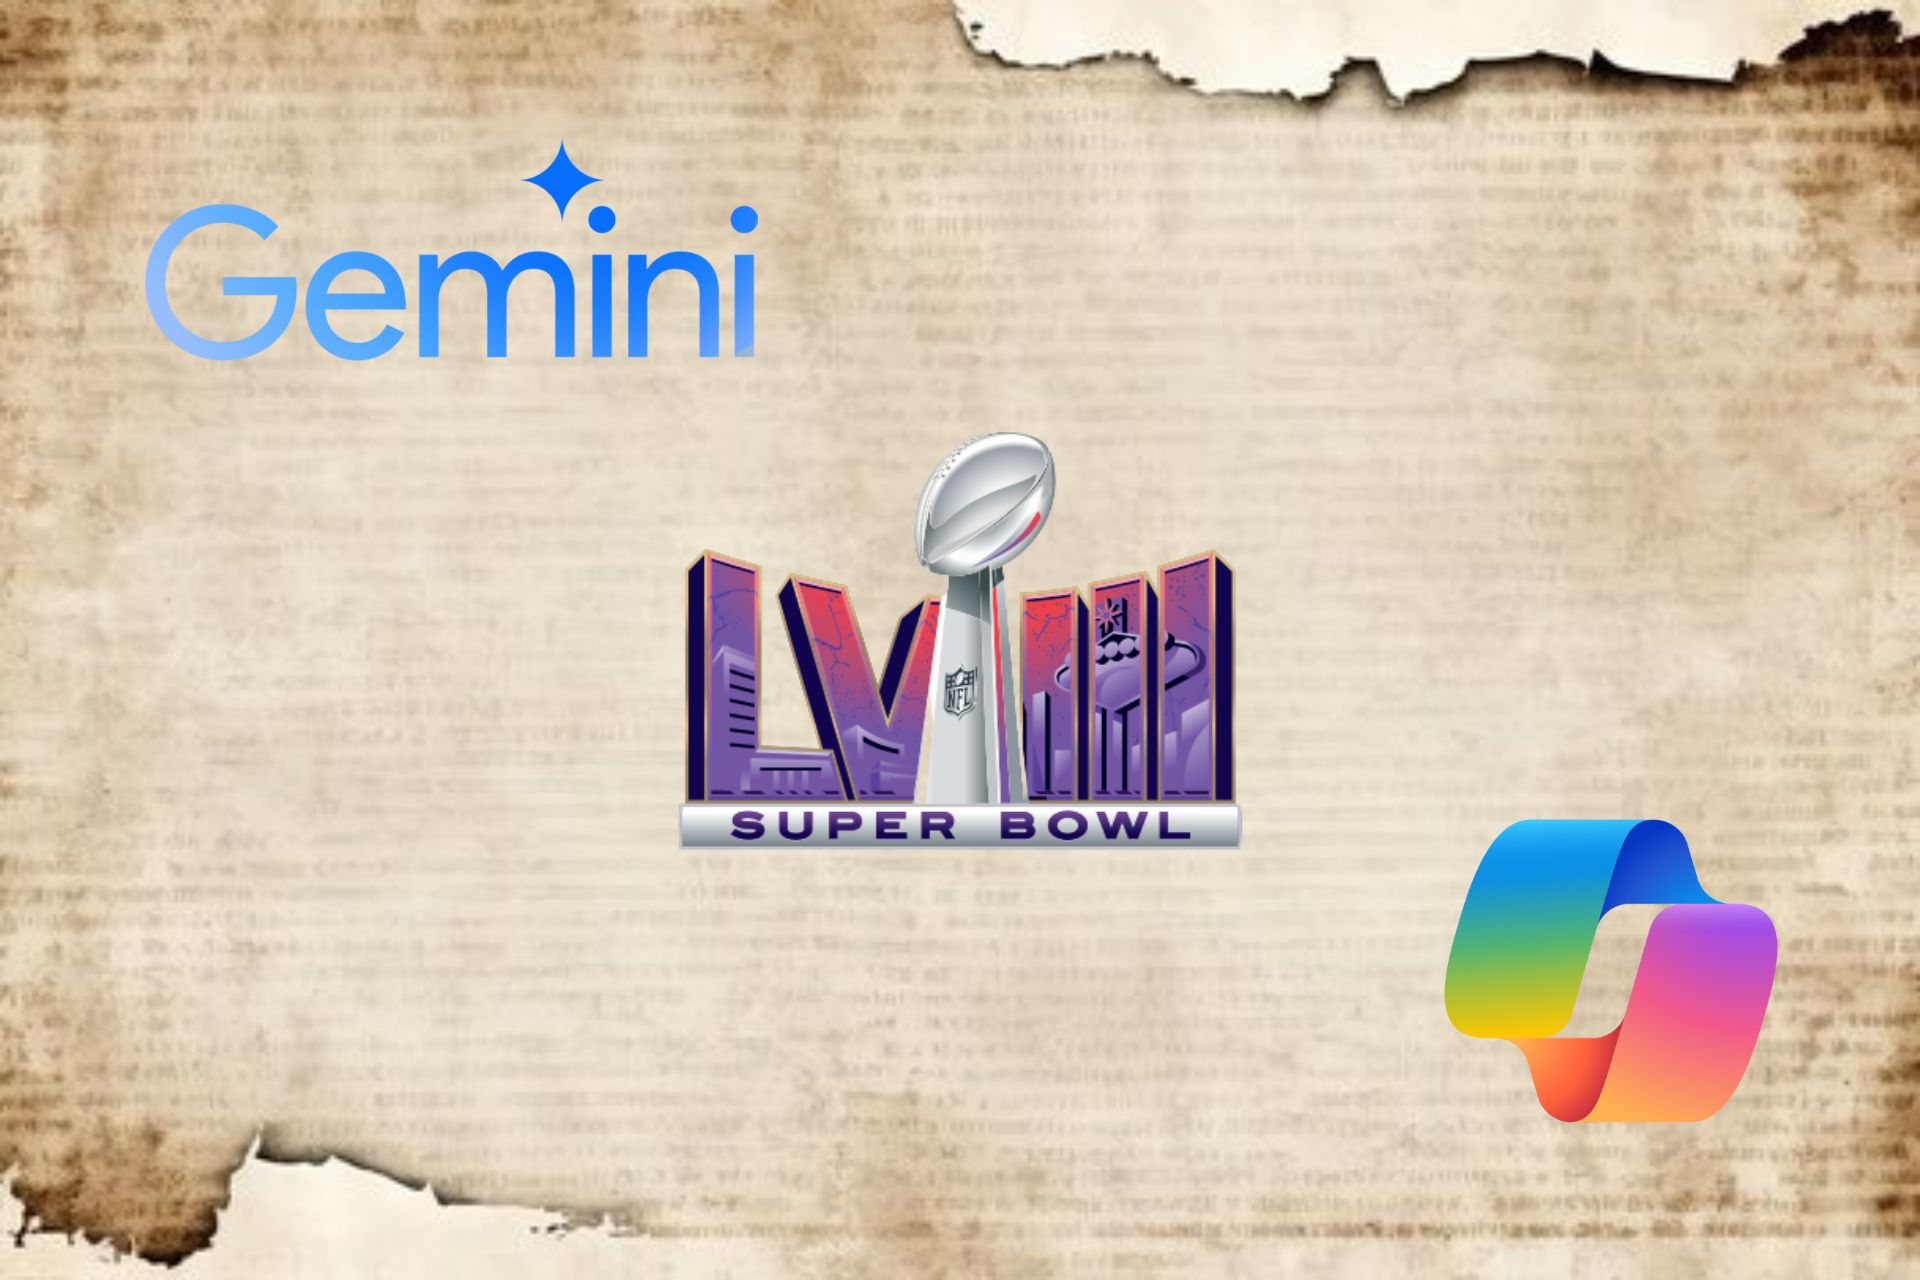 Super Bowl LVIII featuring Copilot and Gemini on a cardboard background